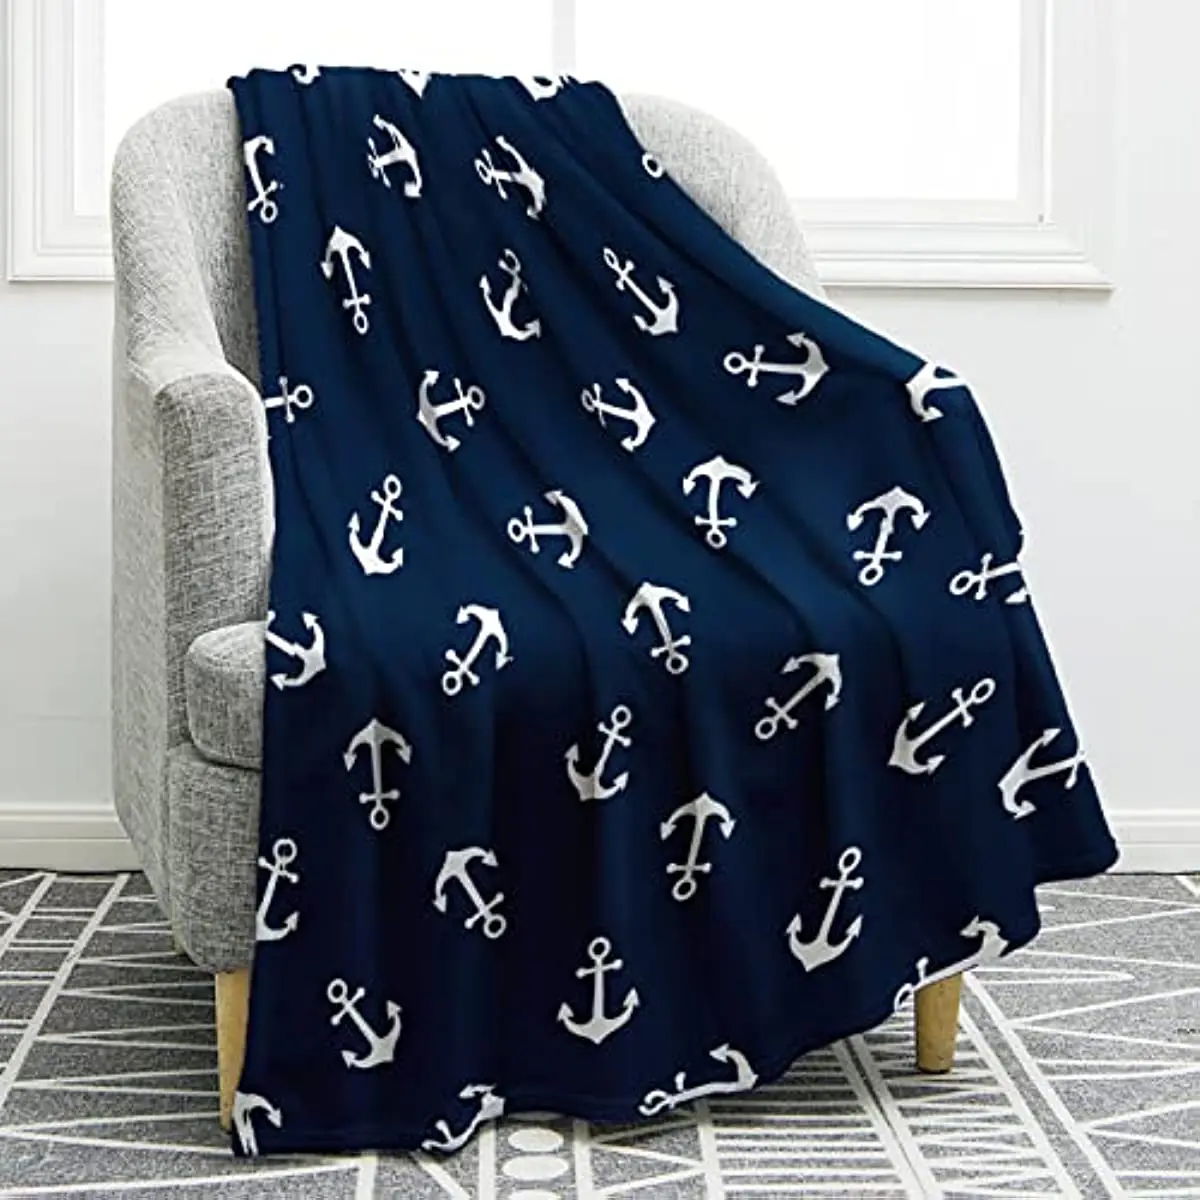 

SaltaStore Nautical Anchor Blanket Sea Adventure Ocean Theme Gifts for Women Kids Boys Men Home Office Bedroom Living Room Decor